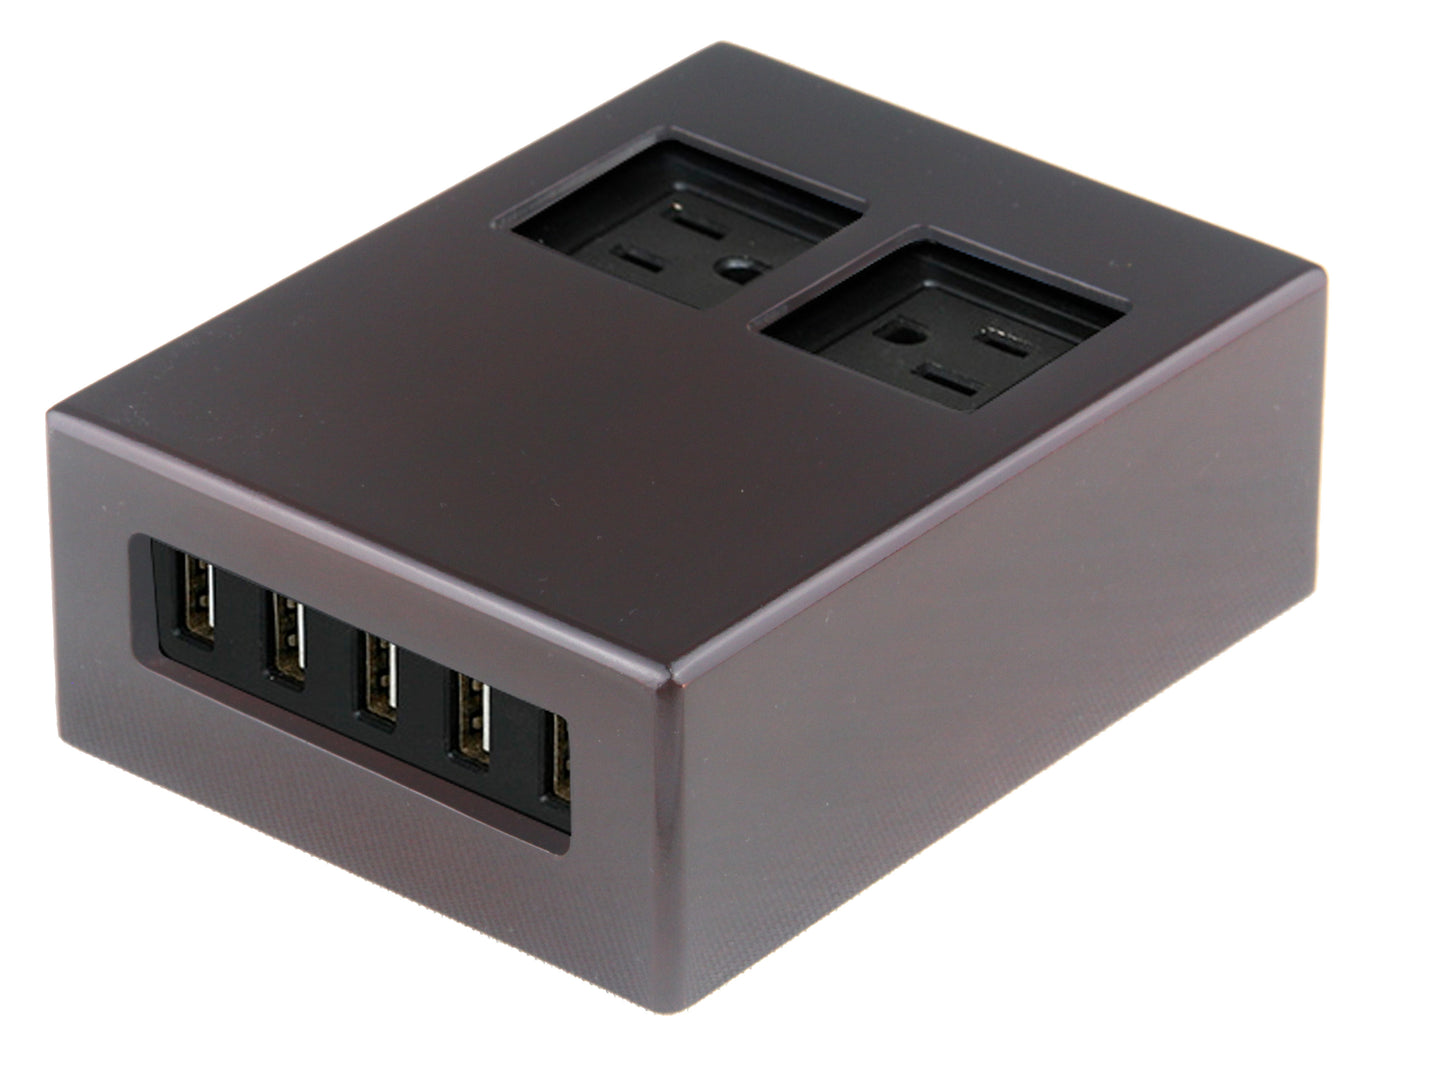 Power Hub - 5 USB & 2 AC Outlets